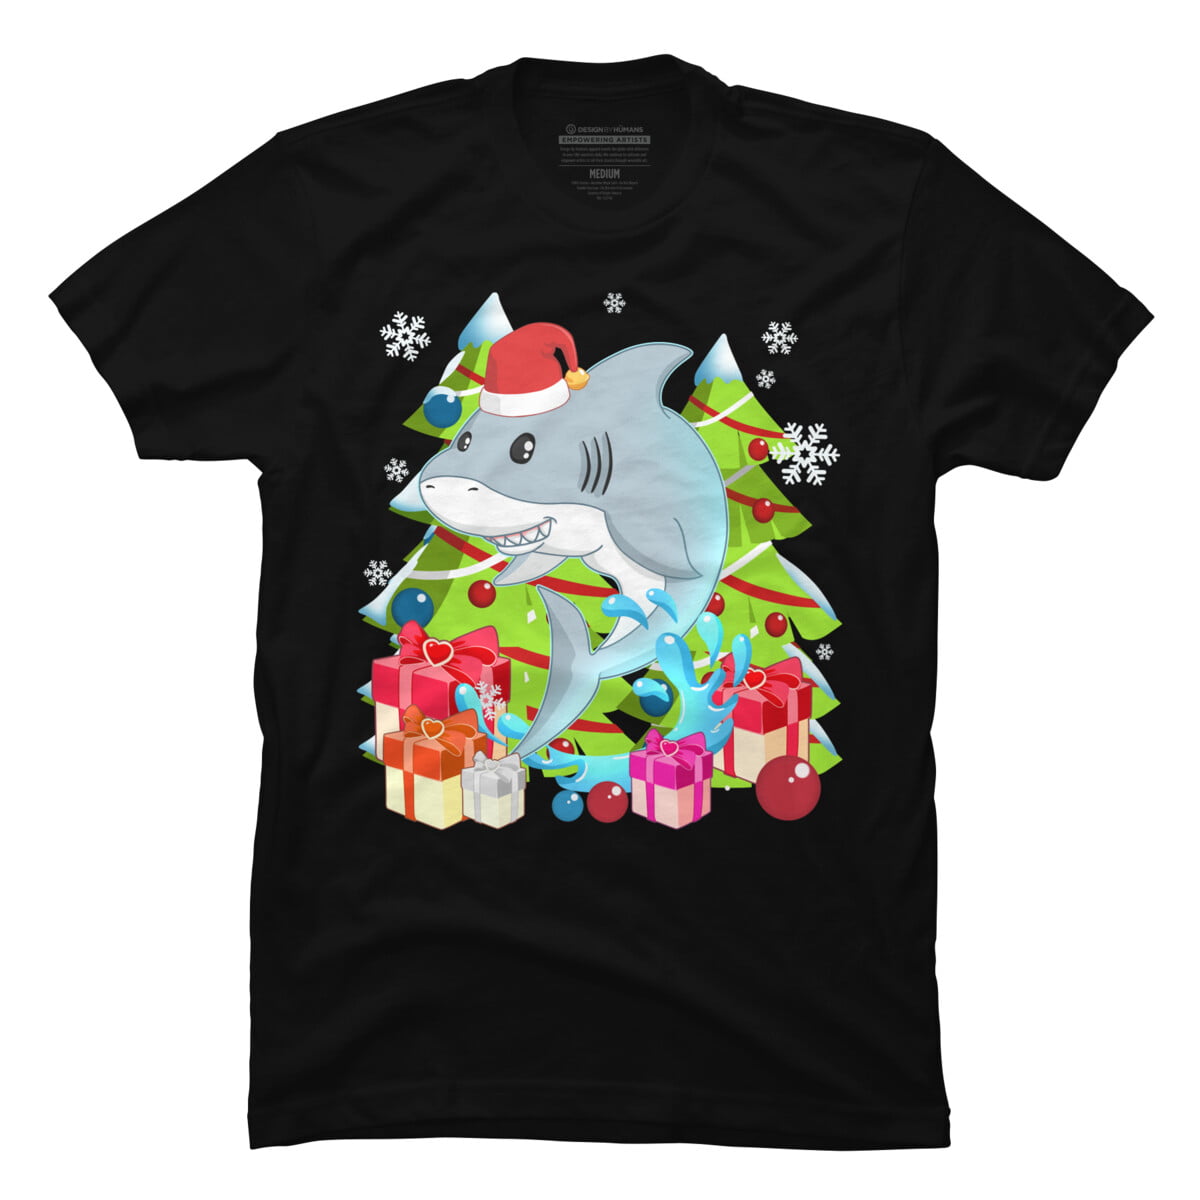 Mens Santa Jaws T Shirt Cool Christmas Gift Shark Funny Graphic Adult Humor  (Black) - XL 